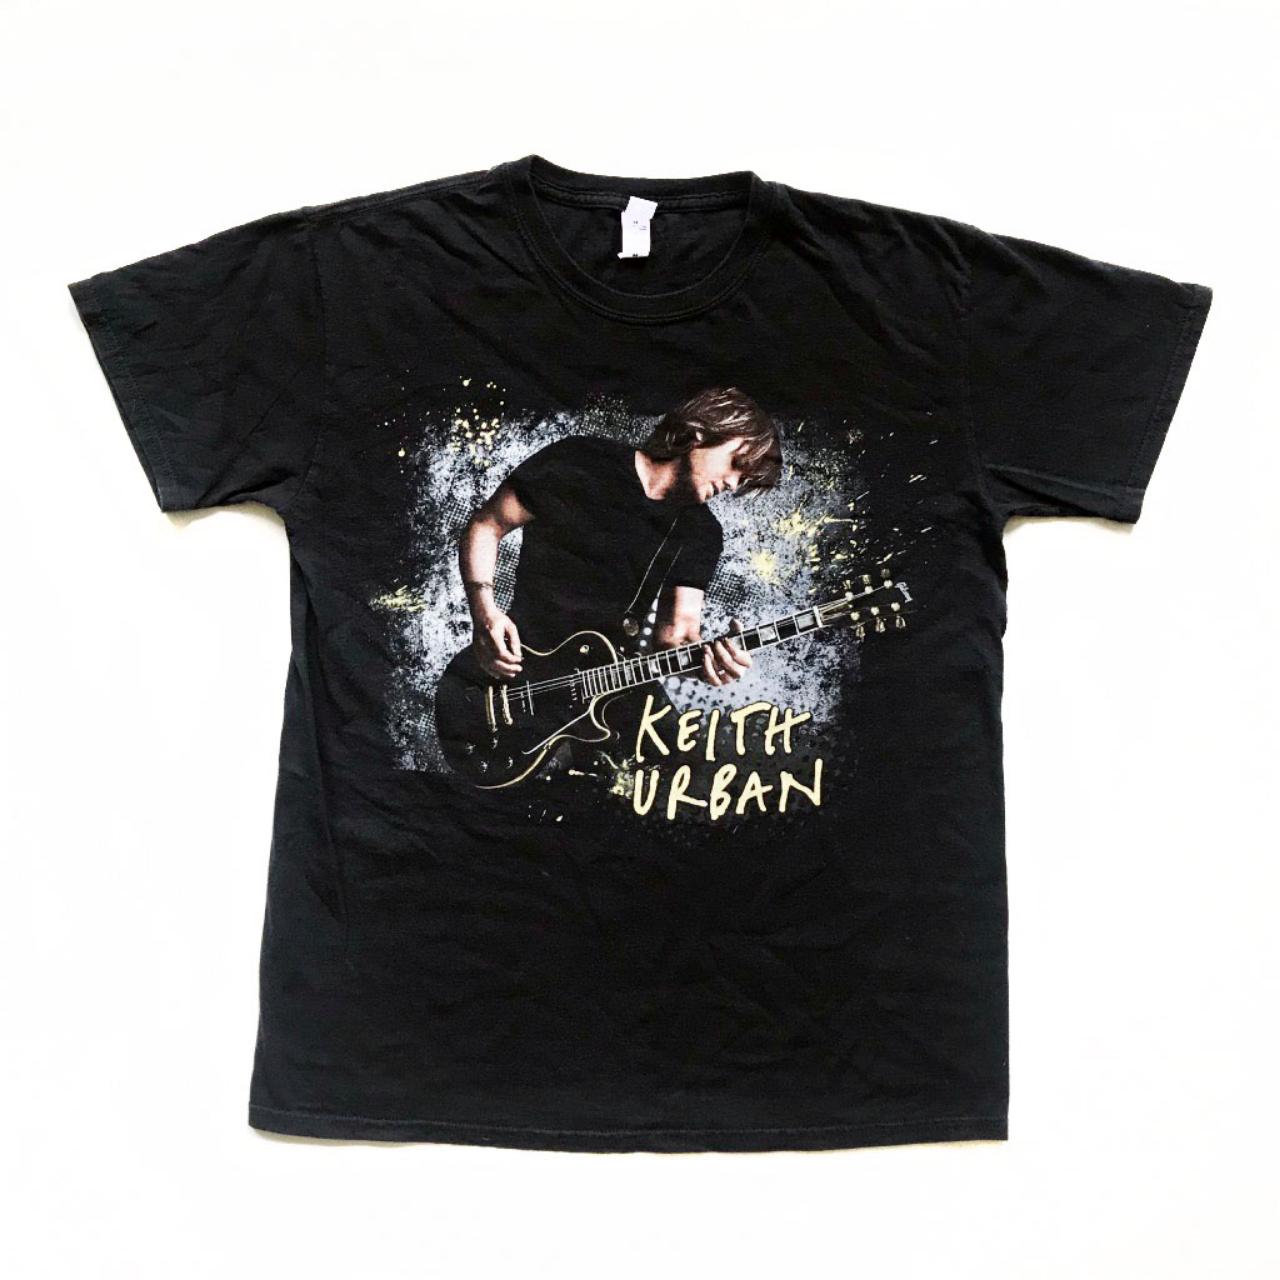 Gildan Men's Black and Grey T-shirt